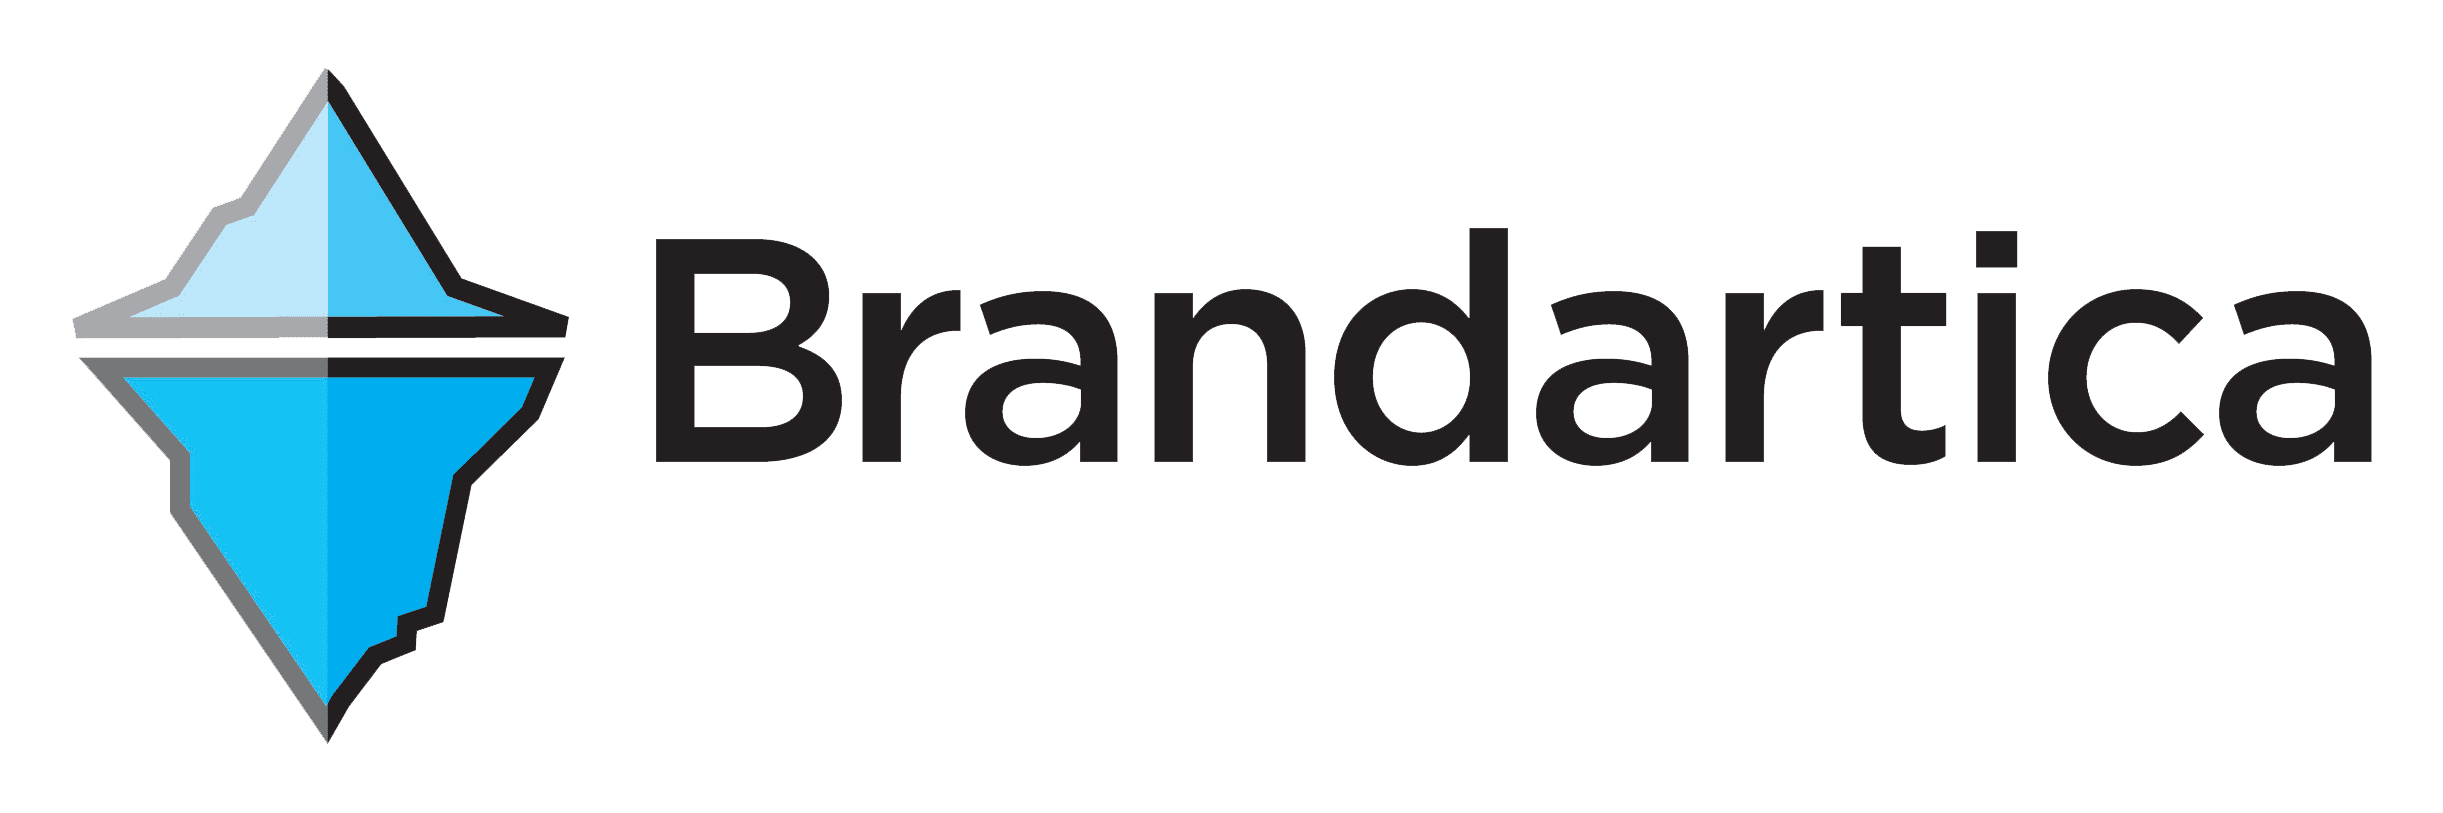 Brandartica | Brand Marketing Agency NH